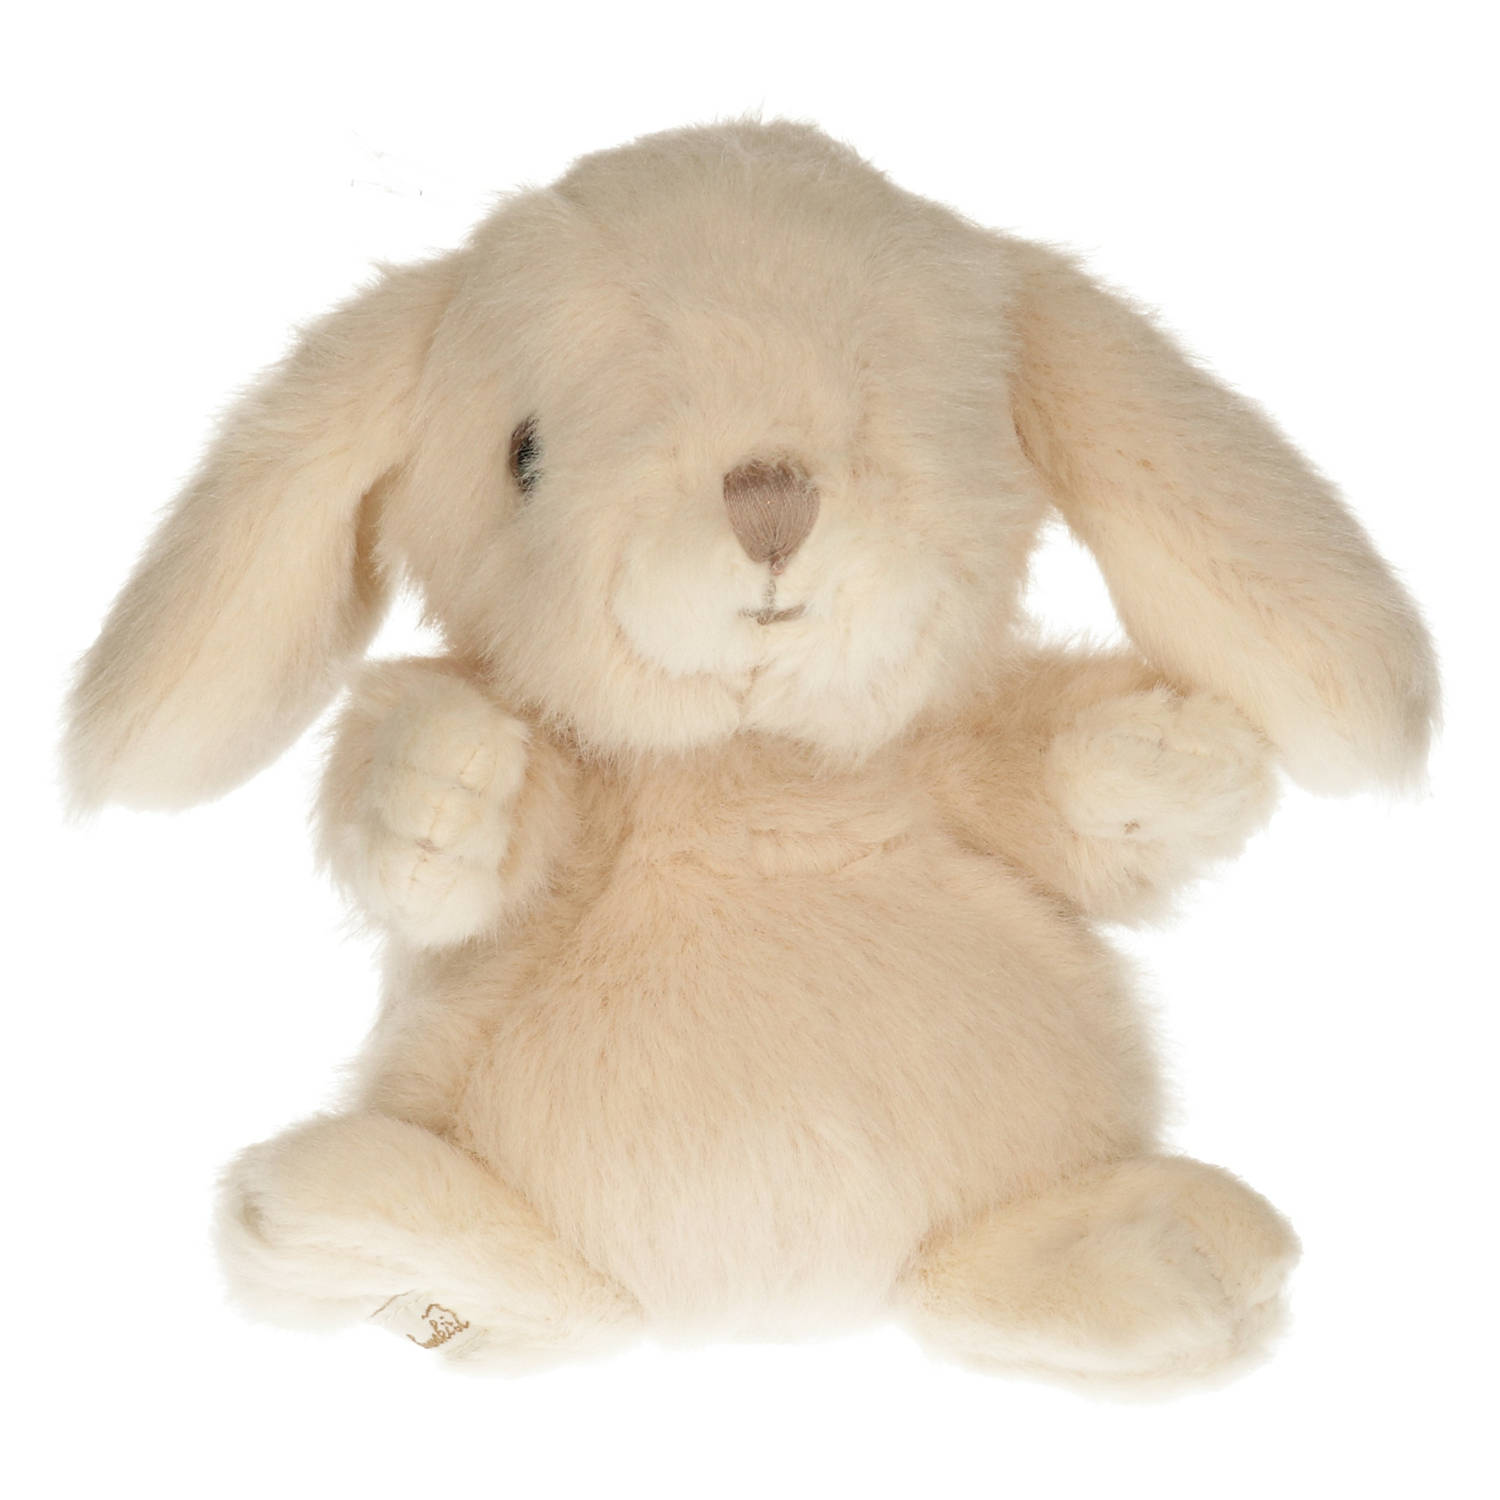 Bukowski pluche konijn knuffeldier - creme wit - zittend - 15 cm - Luxe kwaliteit knuffels